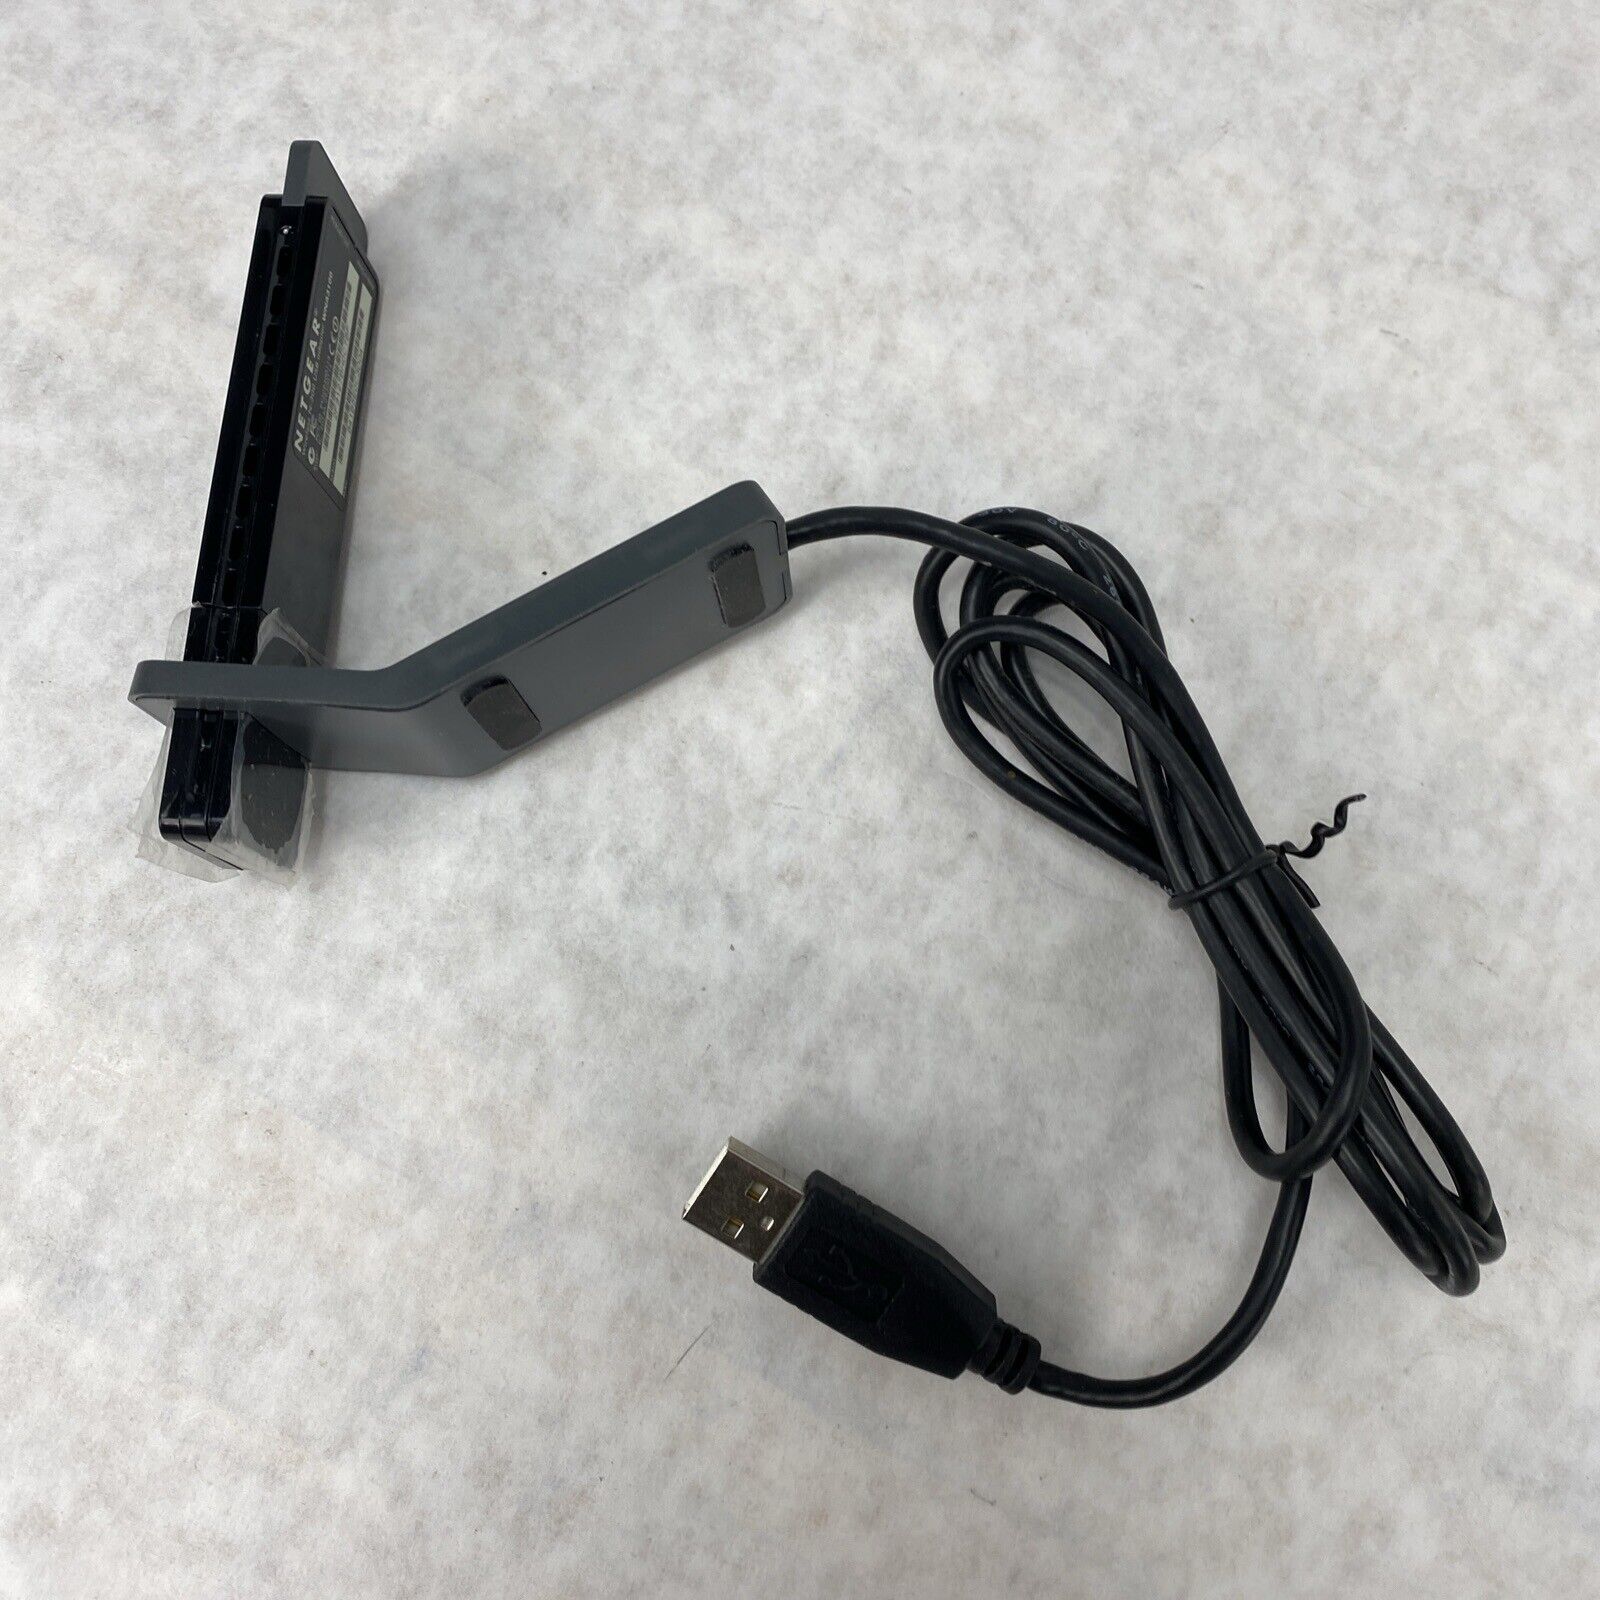 Netgear WNA3100 N-300 USB Wireless Adapter UNTESTED